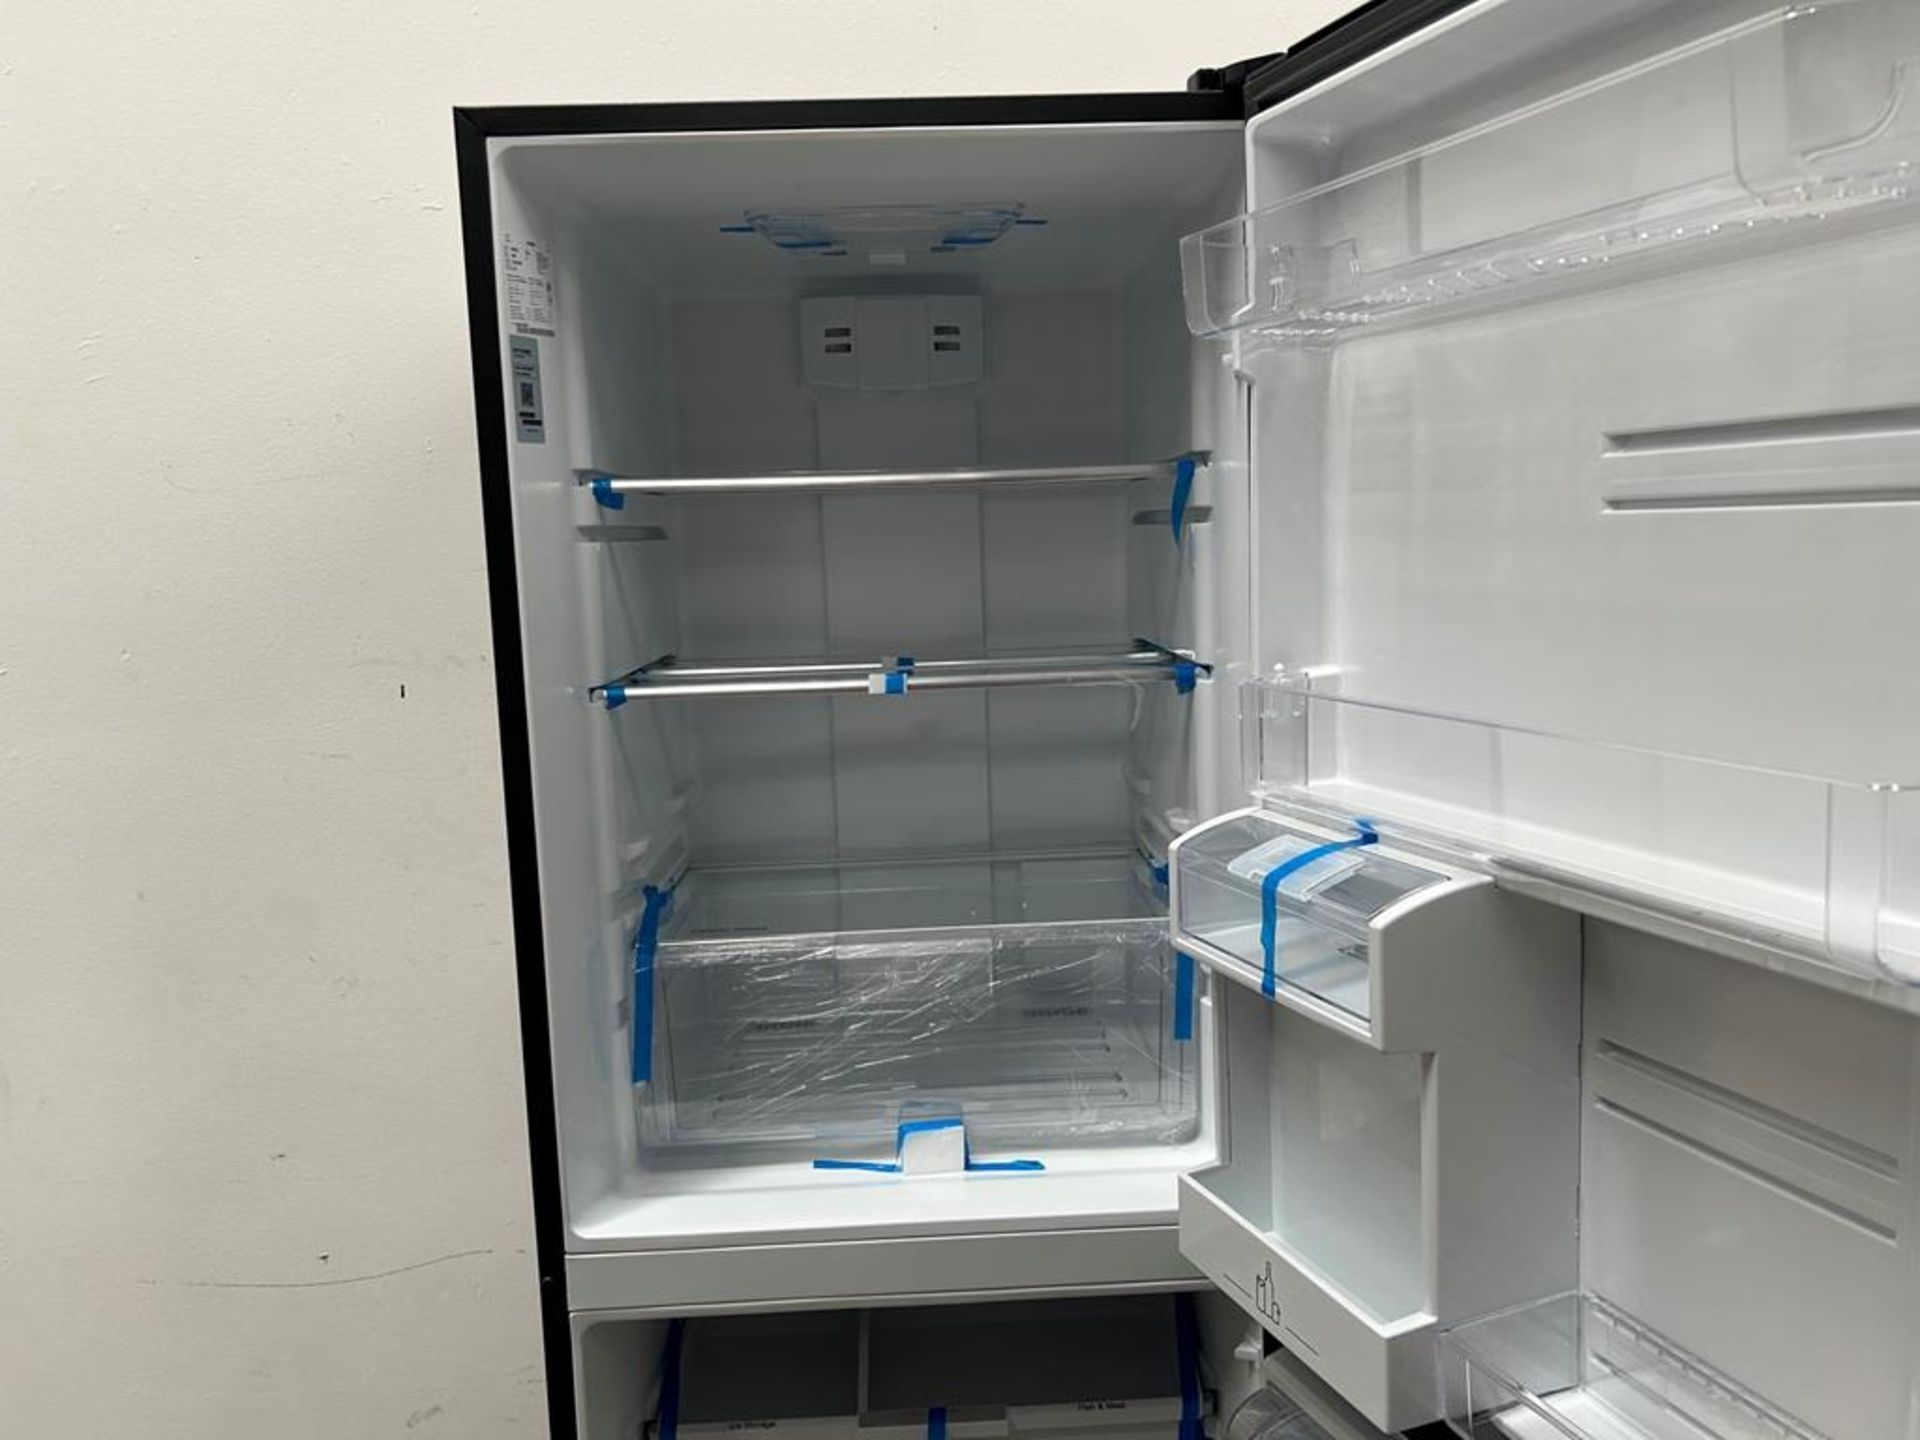 (NUEVO) Refrigerador con dispensador de agua Marca MABE, Modelo RMB520IJMRPB, Serie 02305, Color NE - Image 5 of 11